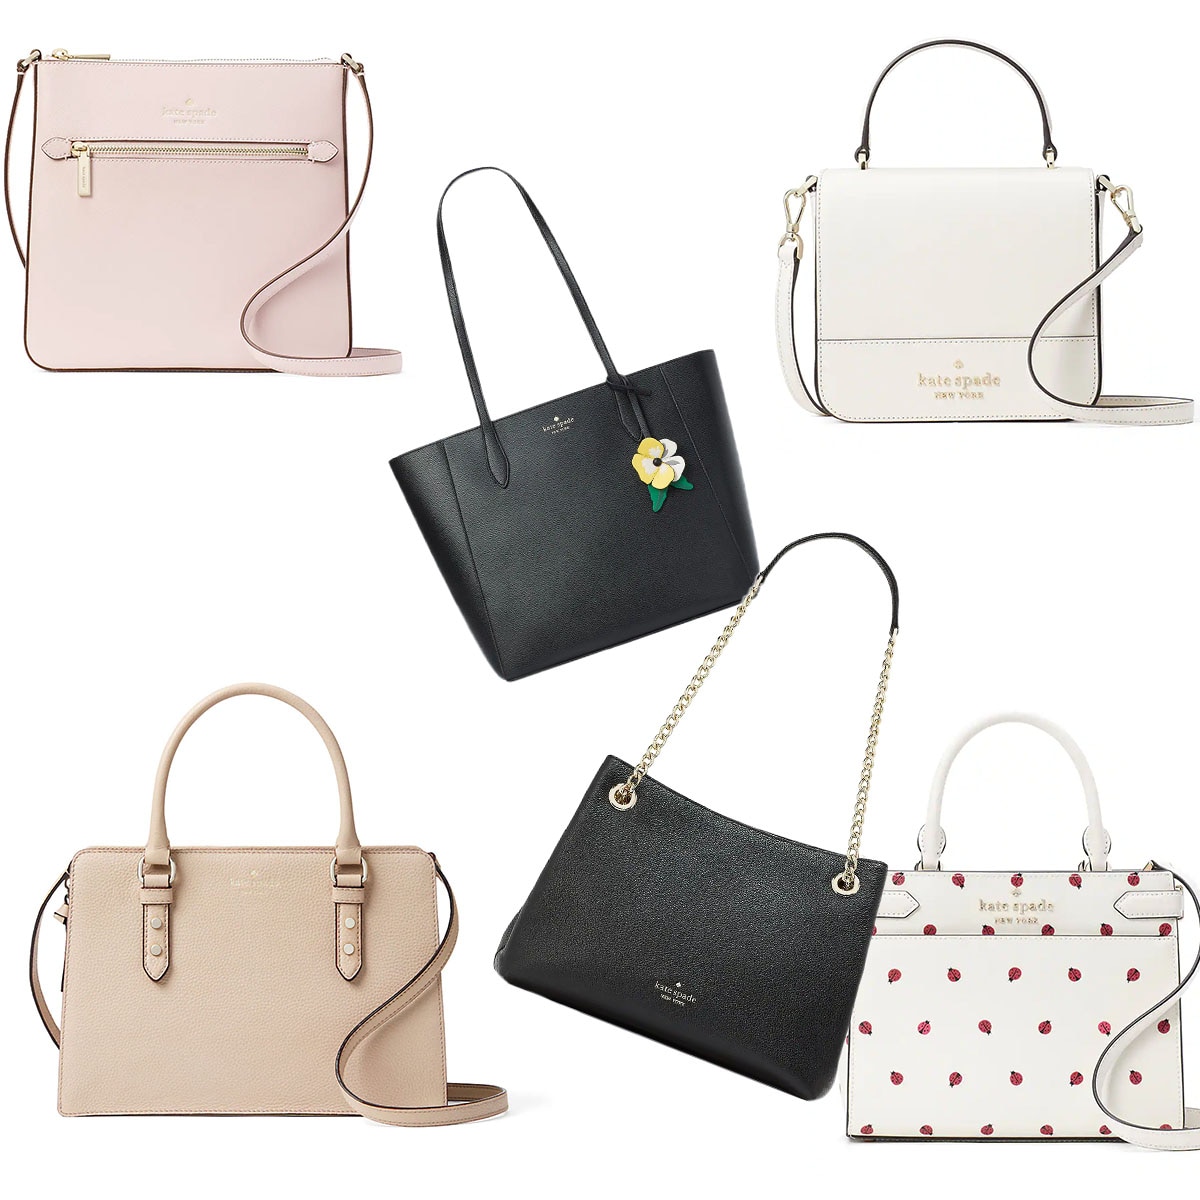 Kate Spade purse | Bags, Purses, Fashion bags